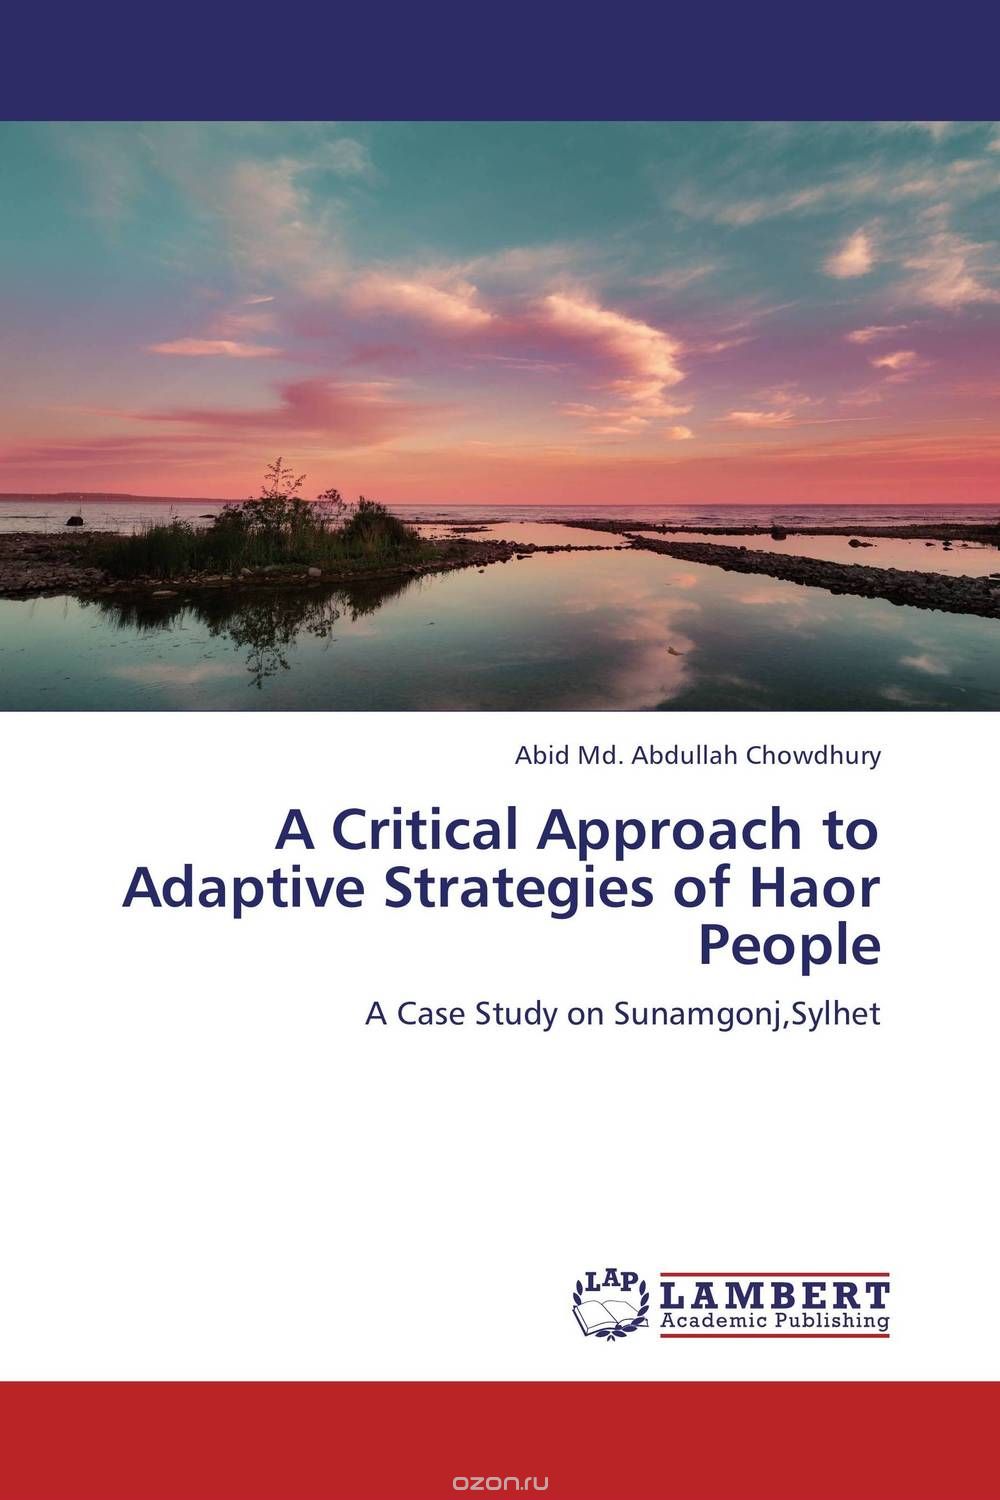 Скачать книгу "A Critical Approach to Adaptive Strategies of Haor People"